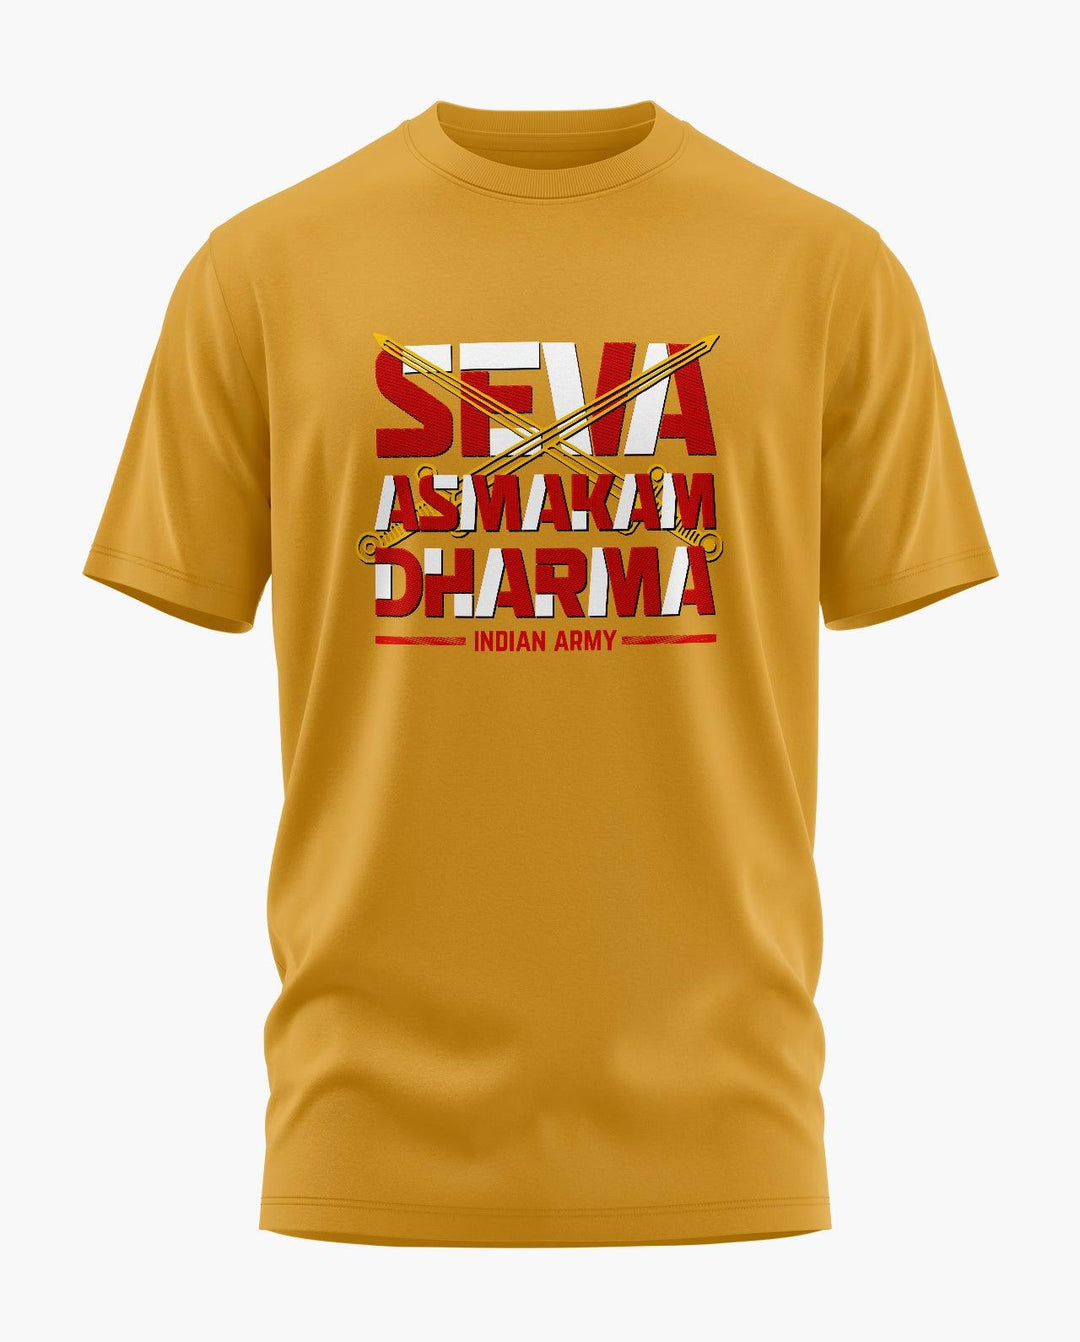 Seva Asmakam Dharma T-Shirt - Aero Armour